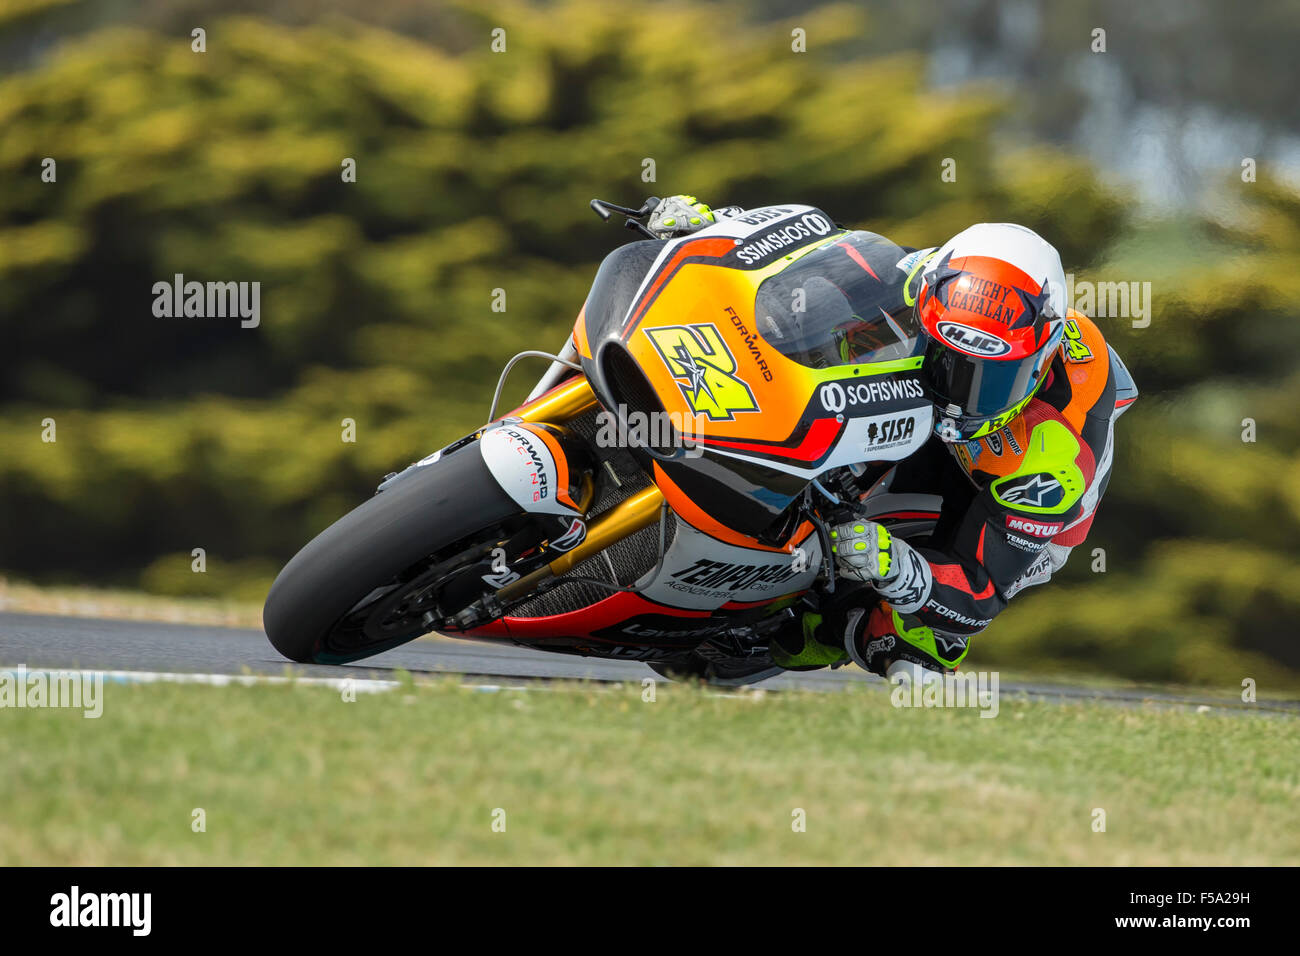 Toni Elias, Forward Racing. Free Practice 2, 2015 Pramac Australian Motorcycle Grand Prix. Stock Photo